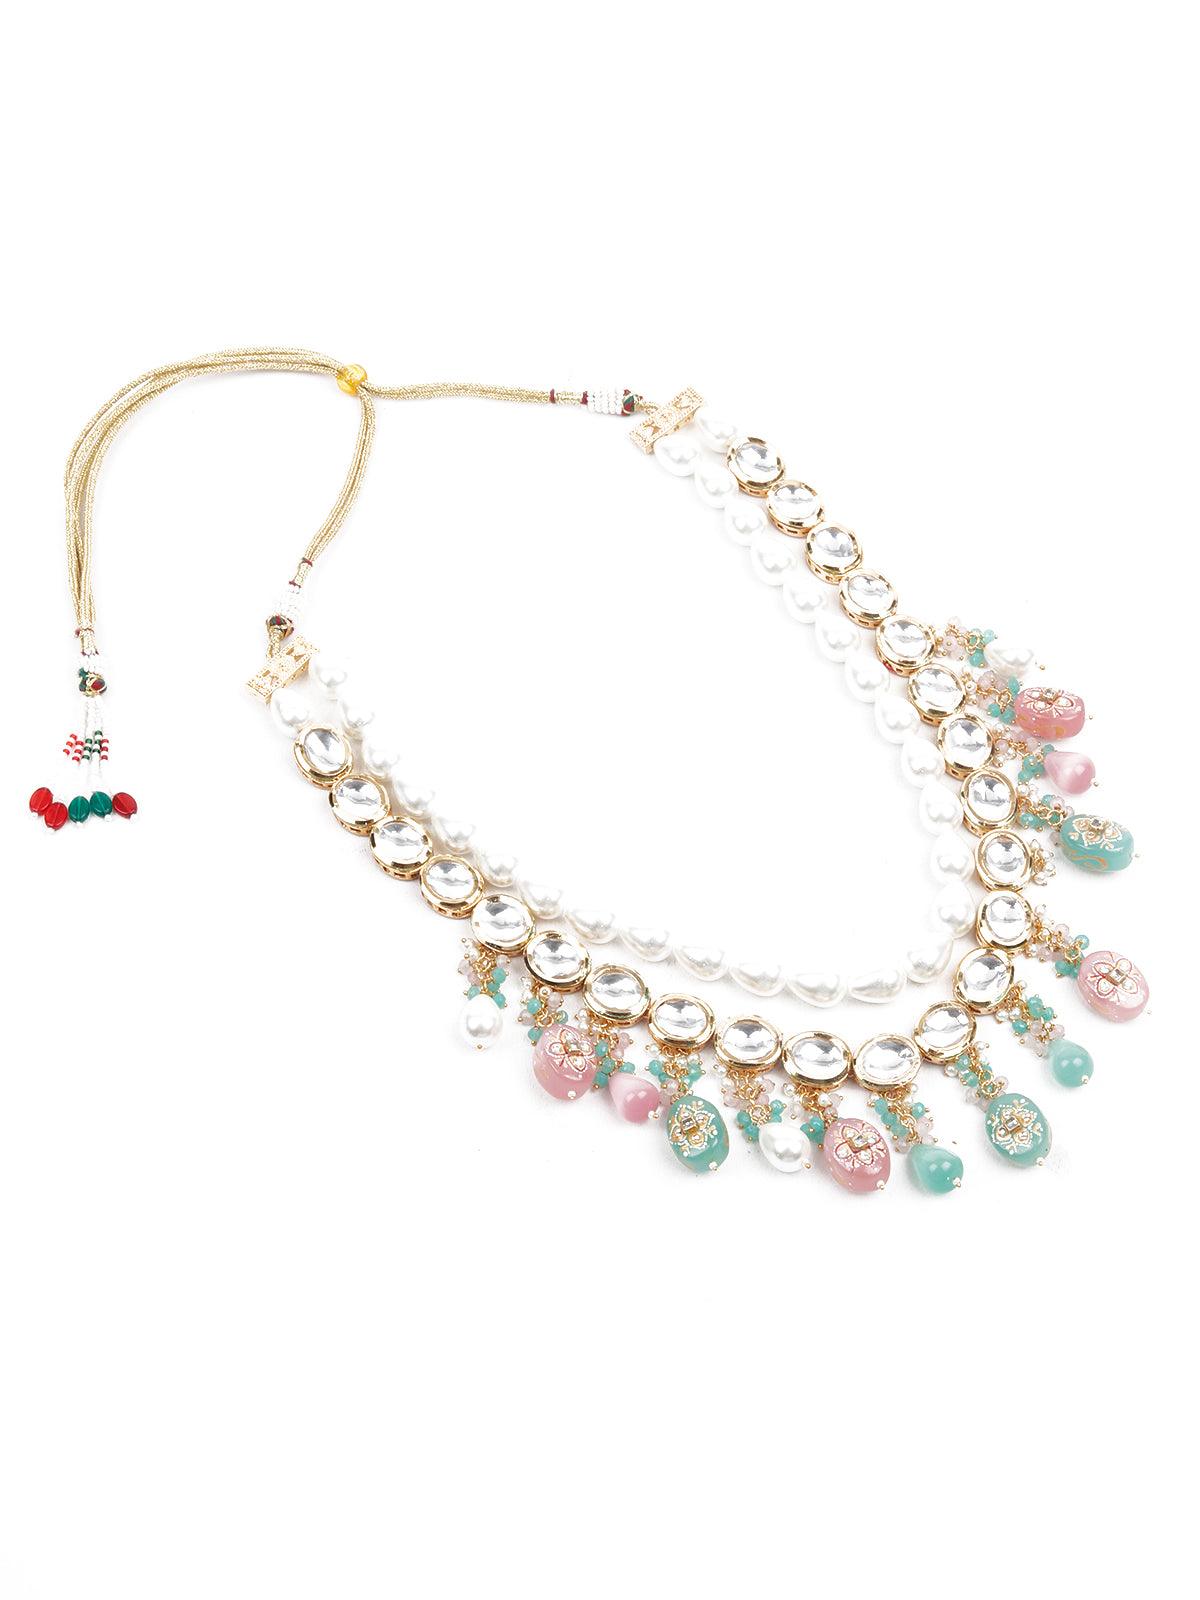 The Pearly Grandeur Necklace Set - Odette